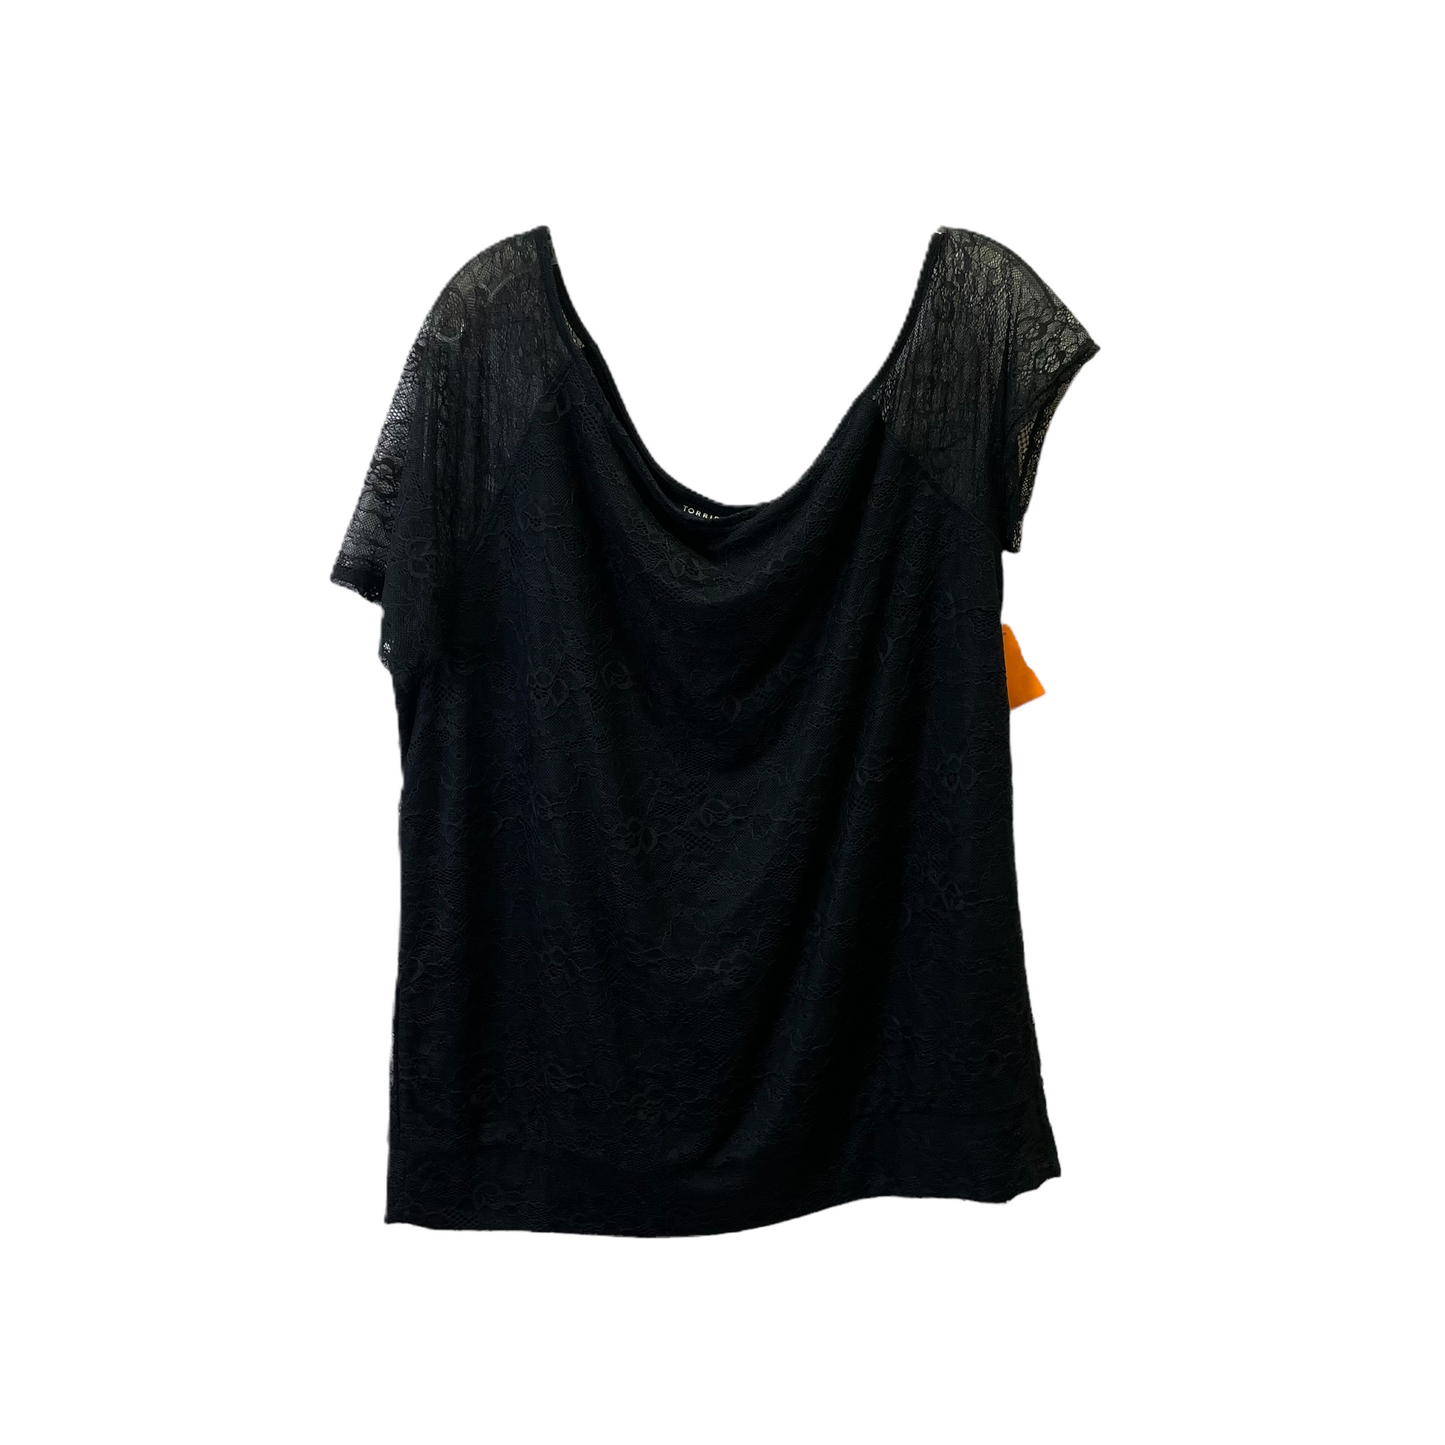 Black Top Short Sleeve By Torrid, Size: 1x